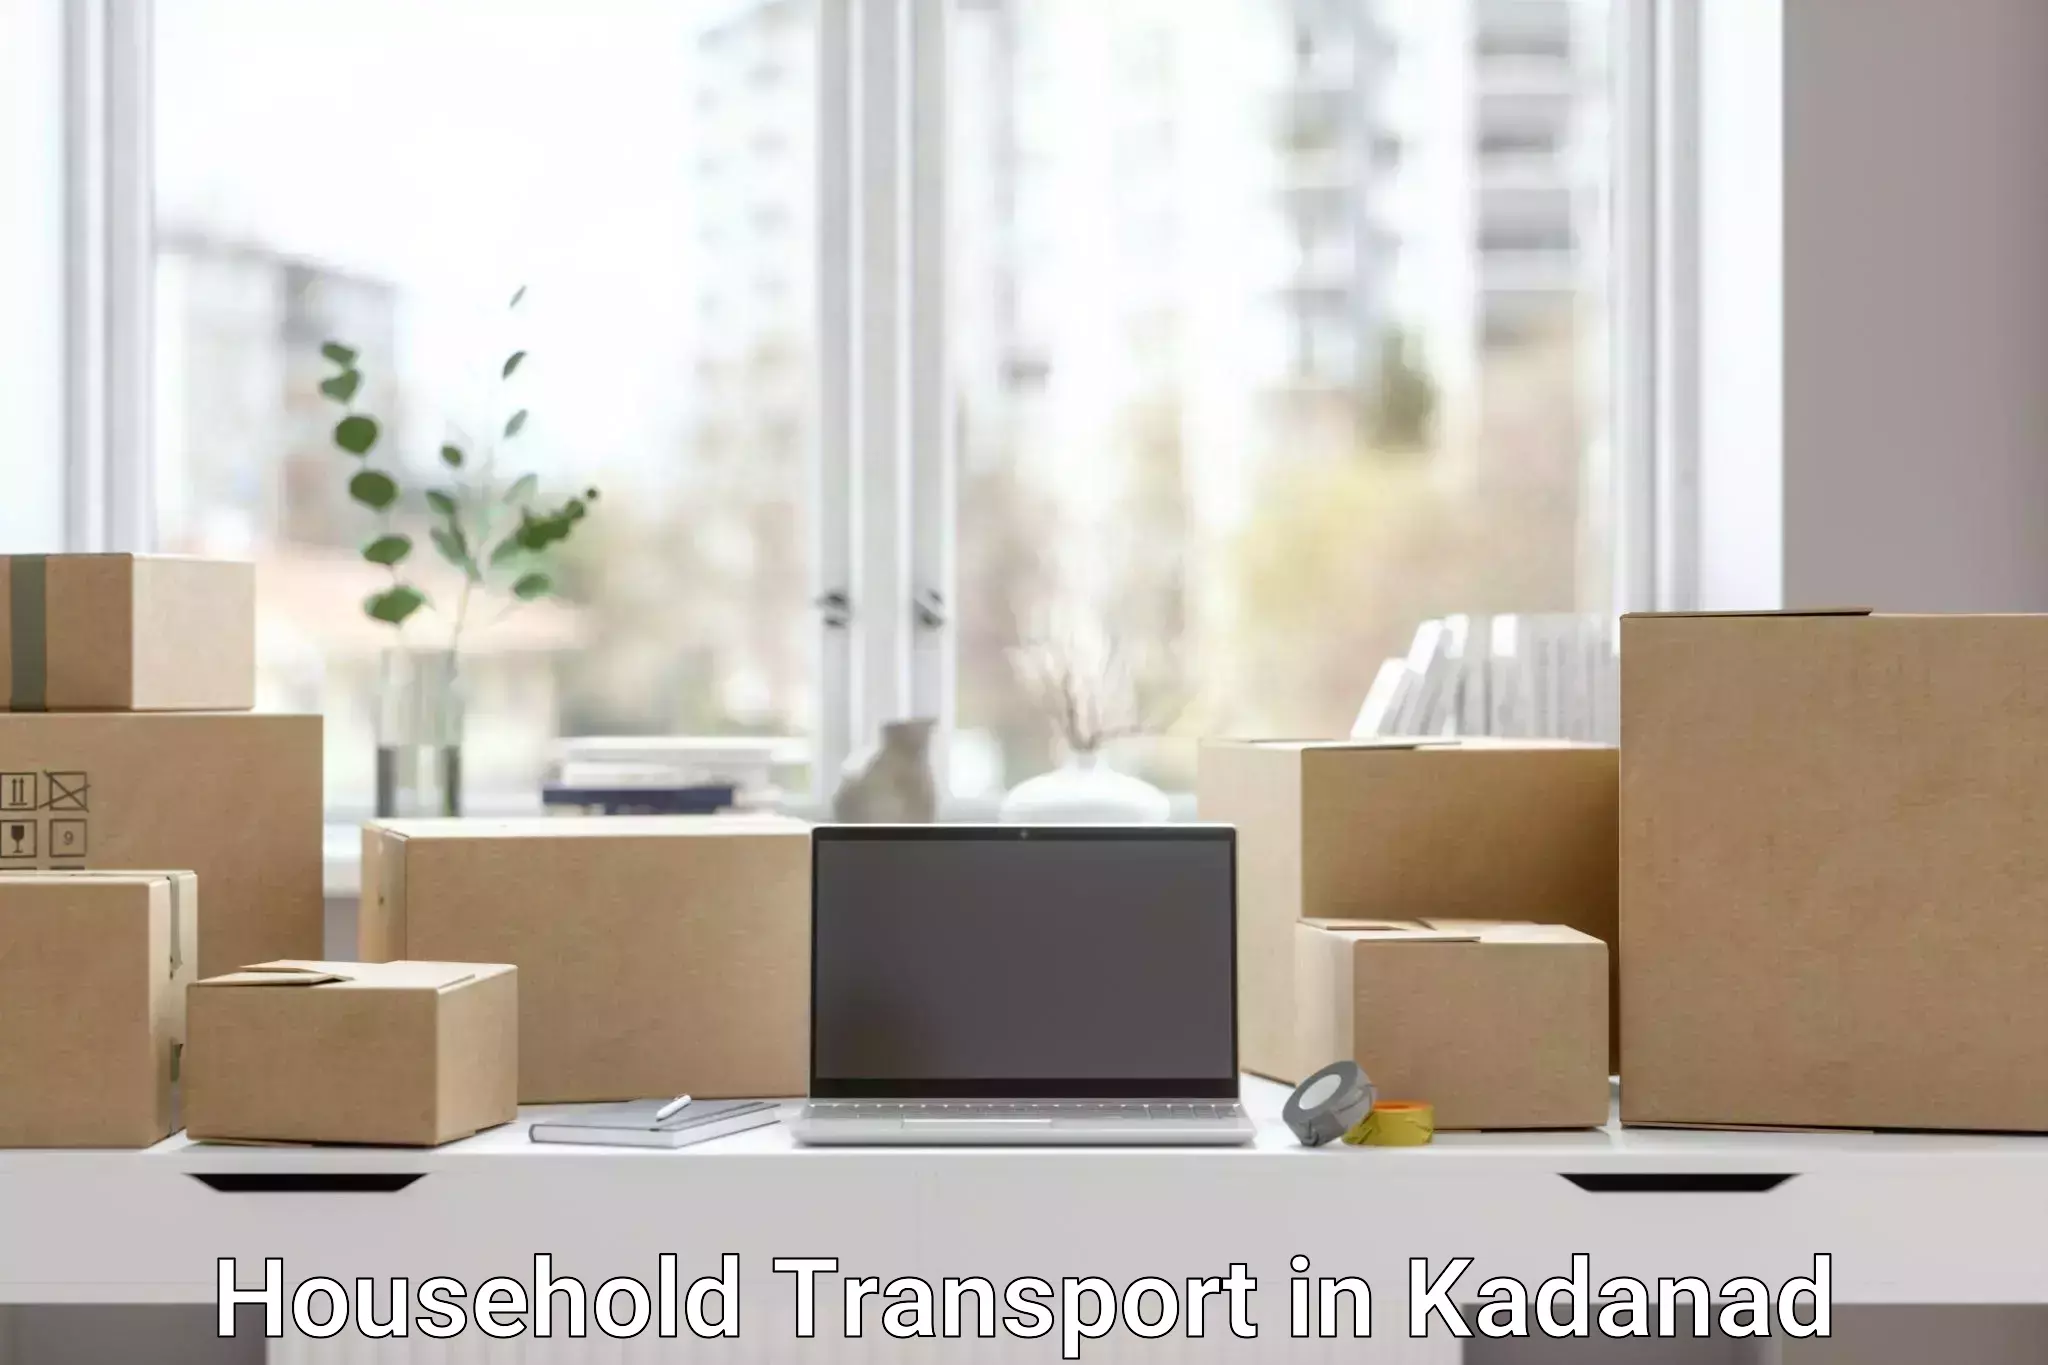 Quality household transport in Kadanad